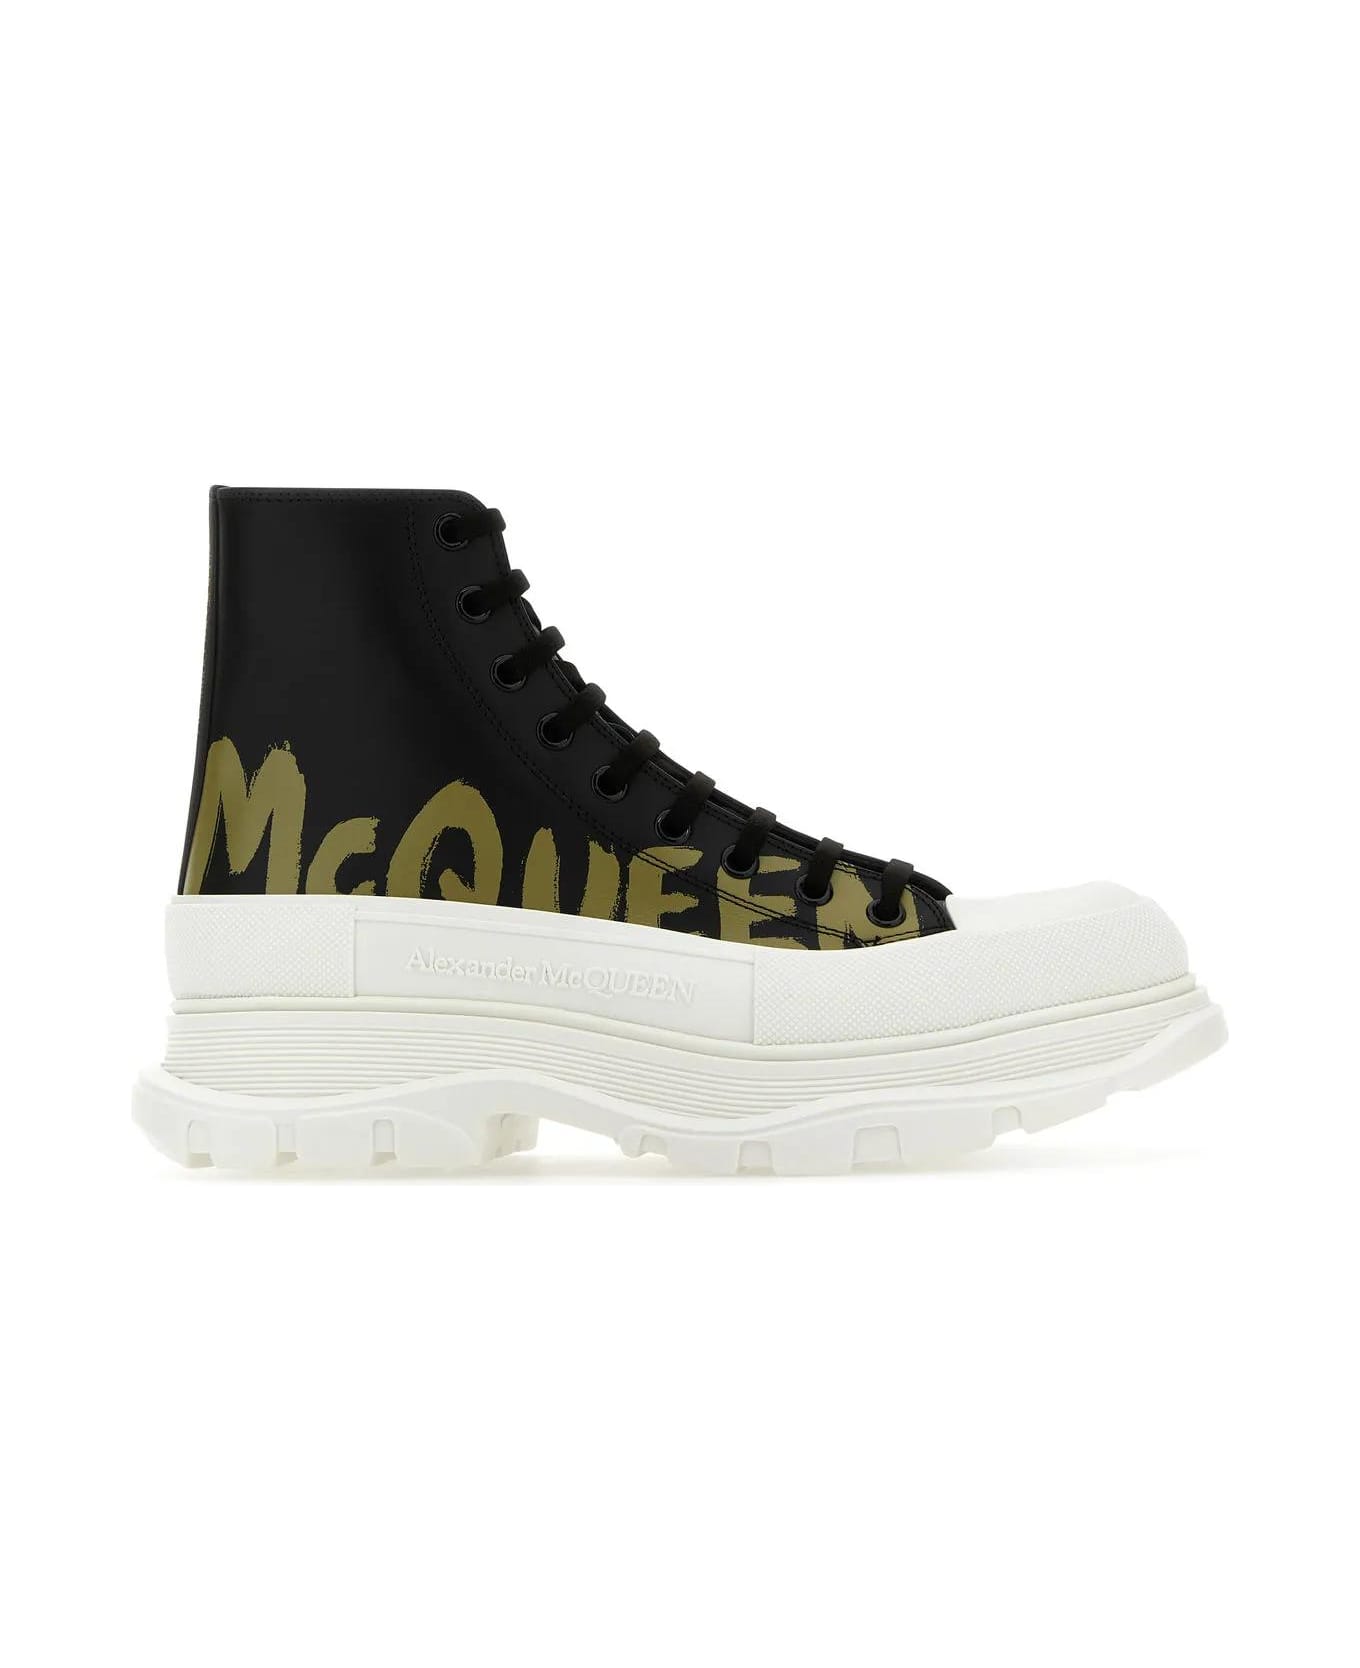 Alexander McQueen Black Leather Tread Slick Sneakers - Black スニーカー